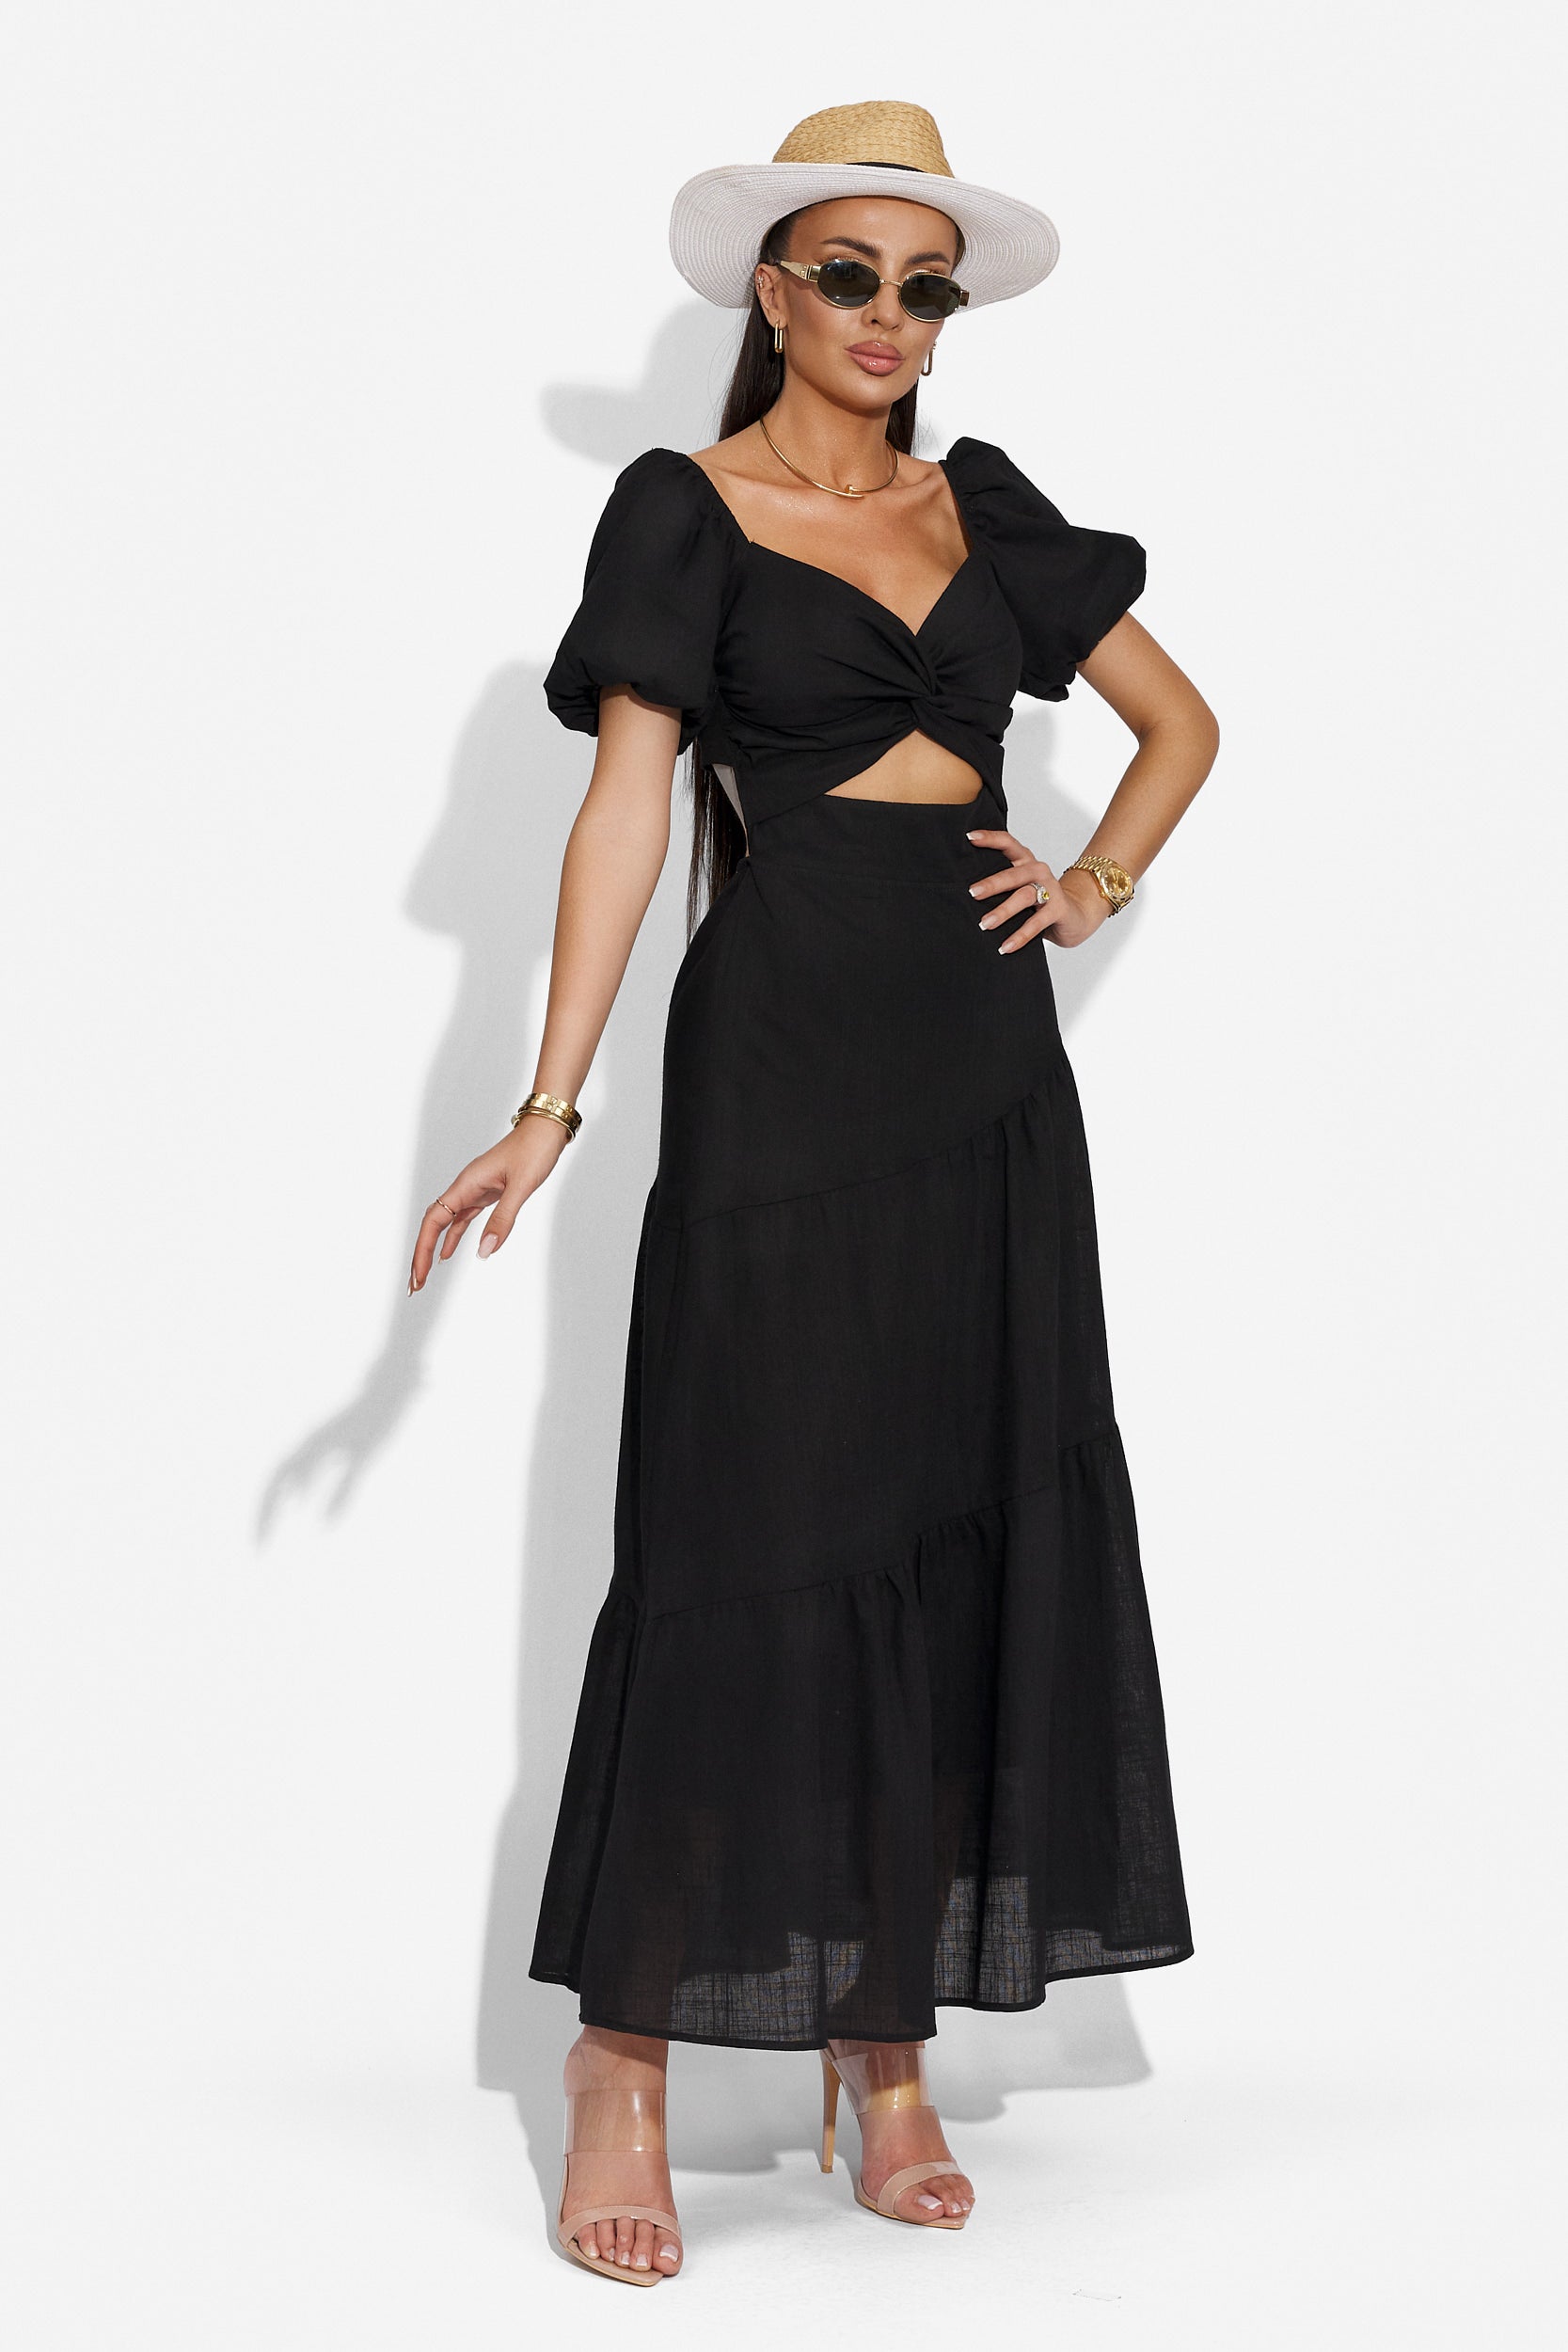 Black long lady dress Mosysca Bogas